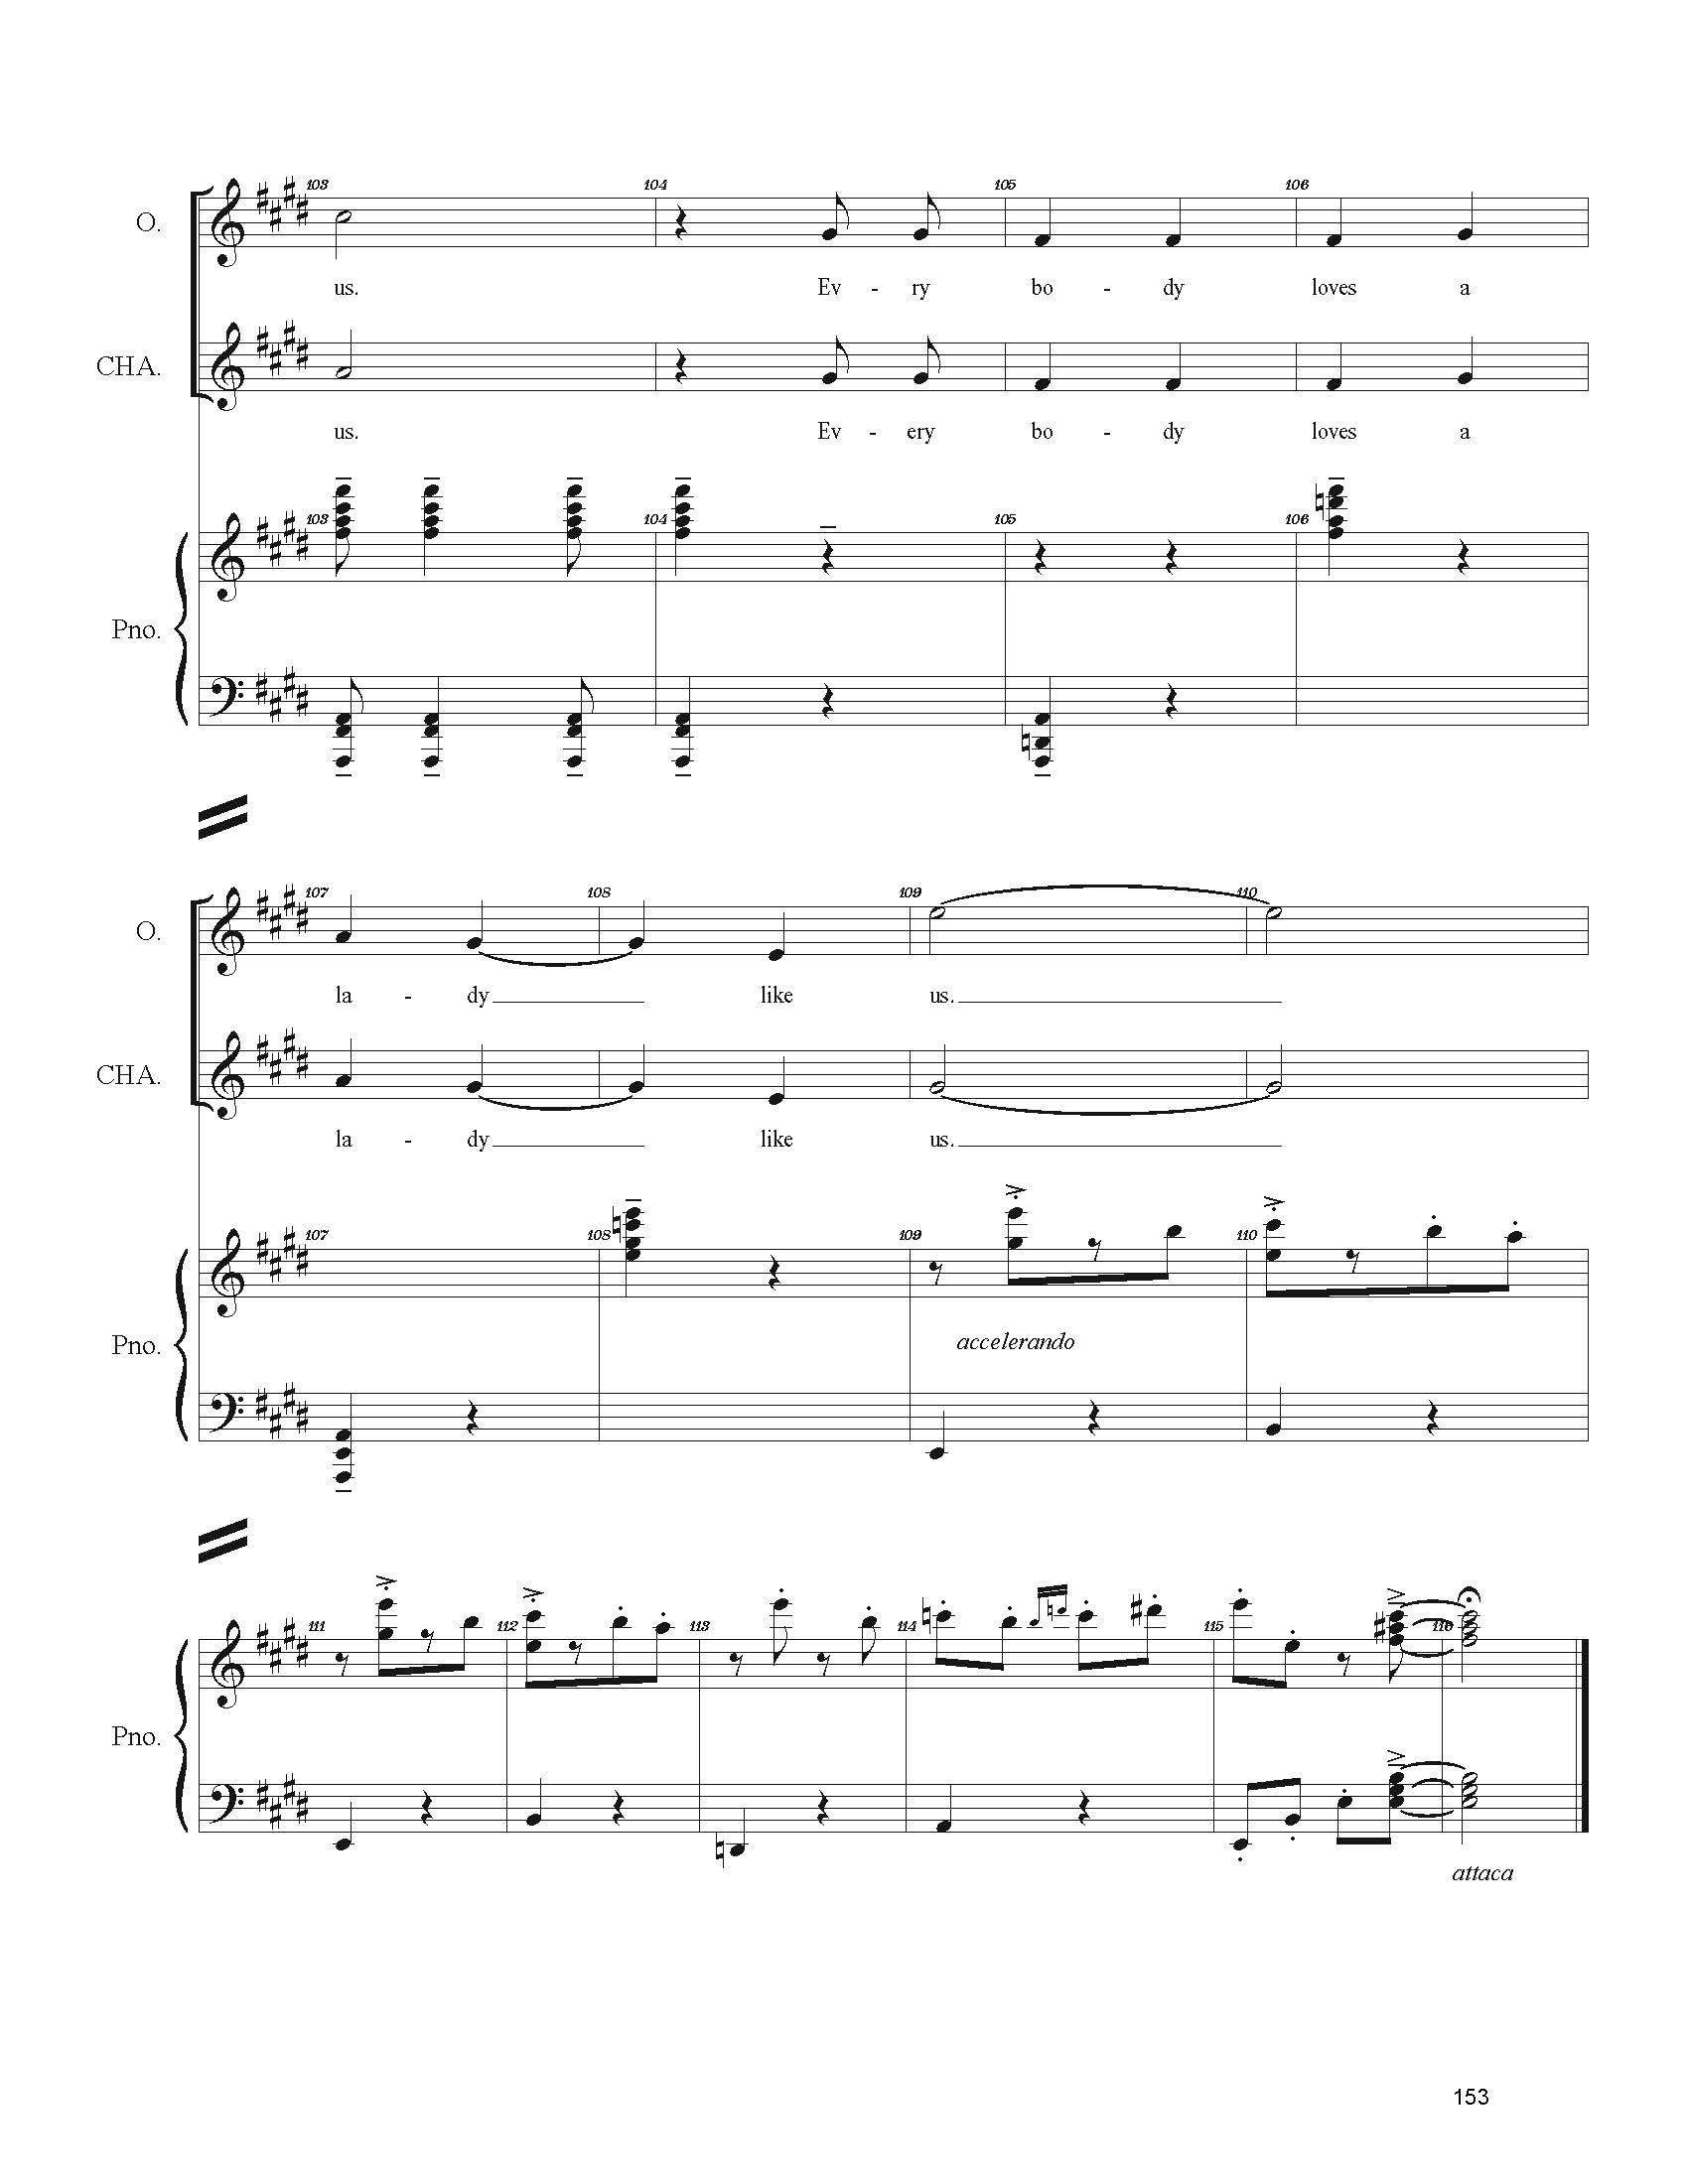 FULL PIANO VOCAL SCORE DRAFT 1 - Score_Page_153.jpg